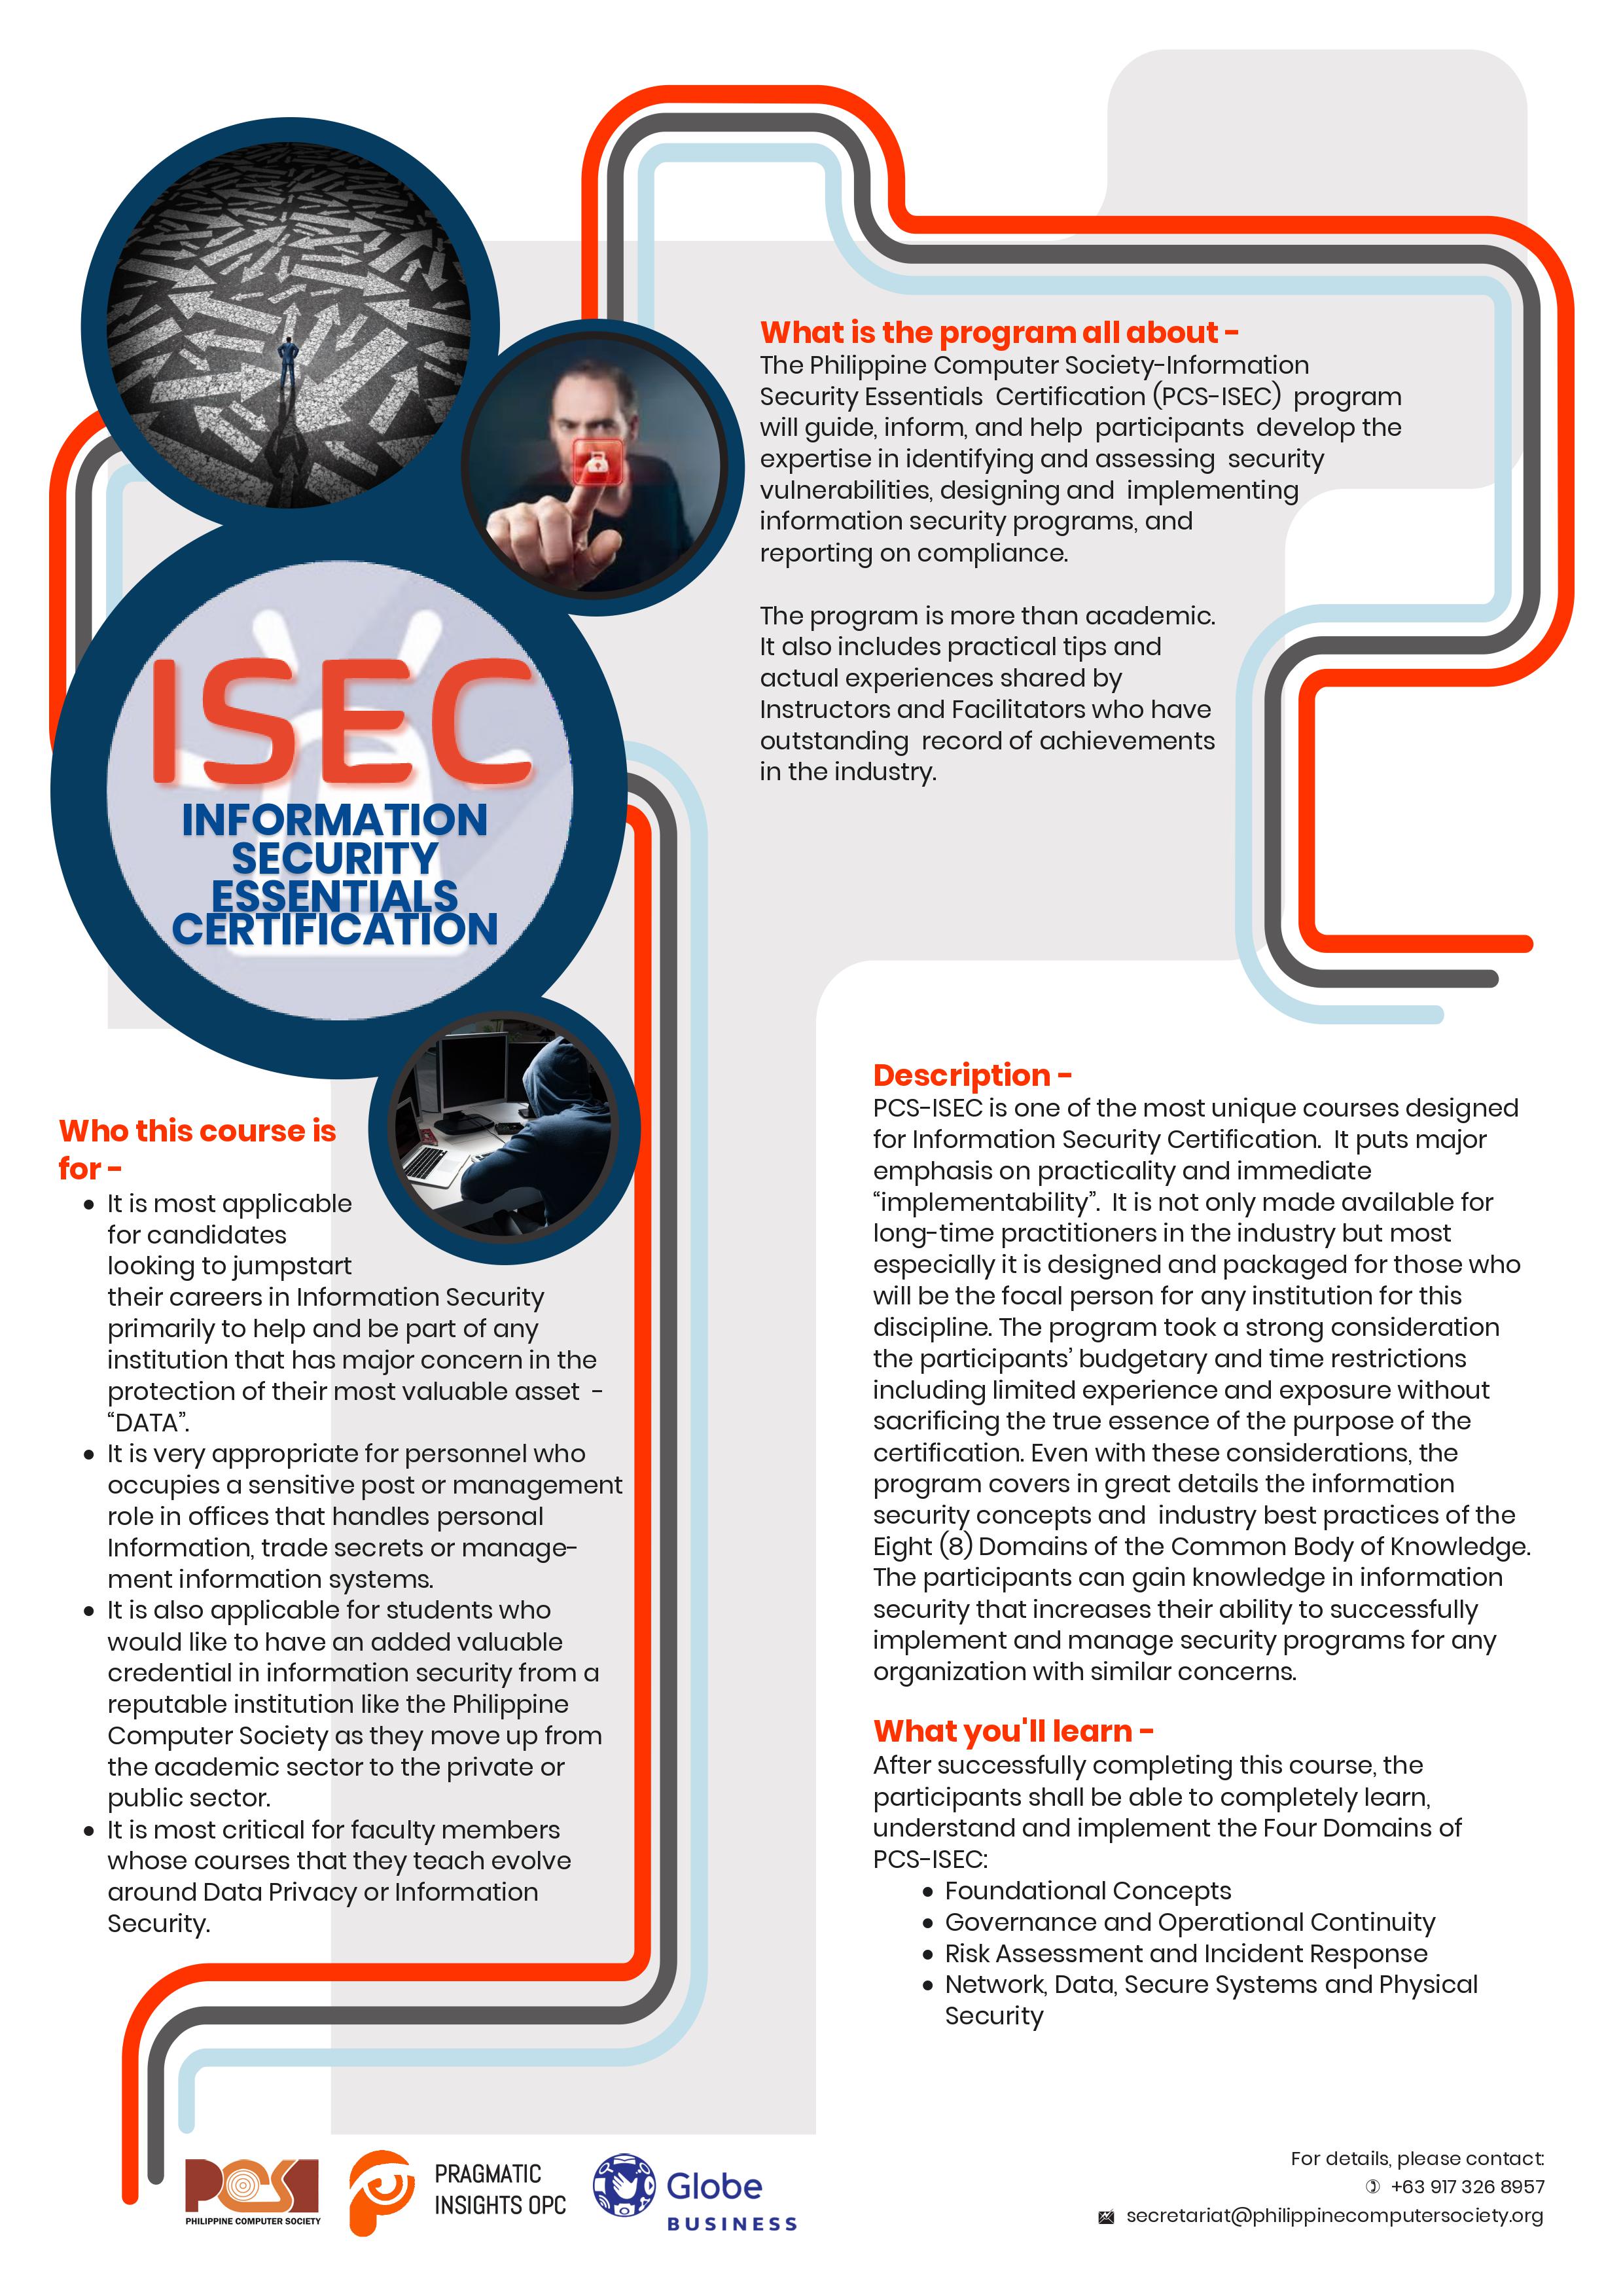 ISEC – Information Security Essentials Certification (Description)